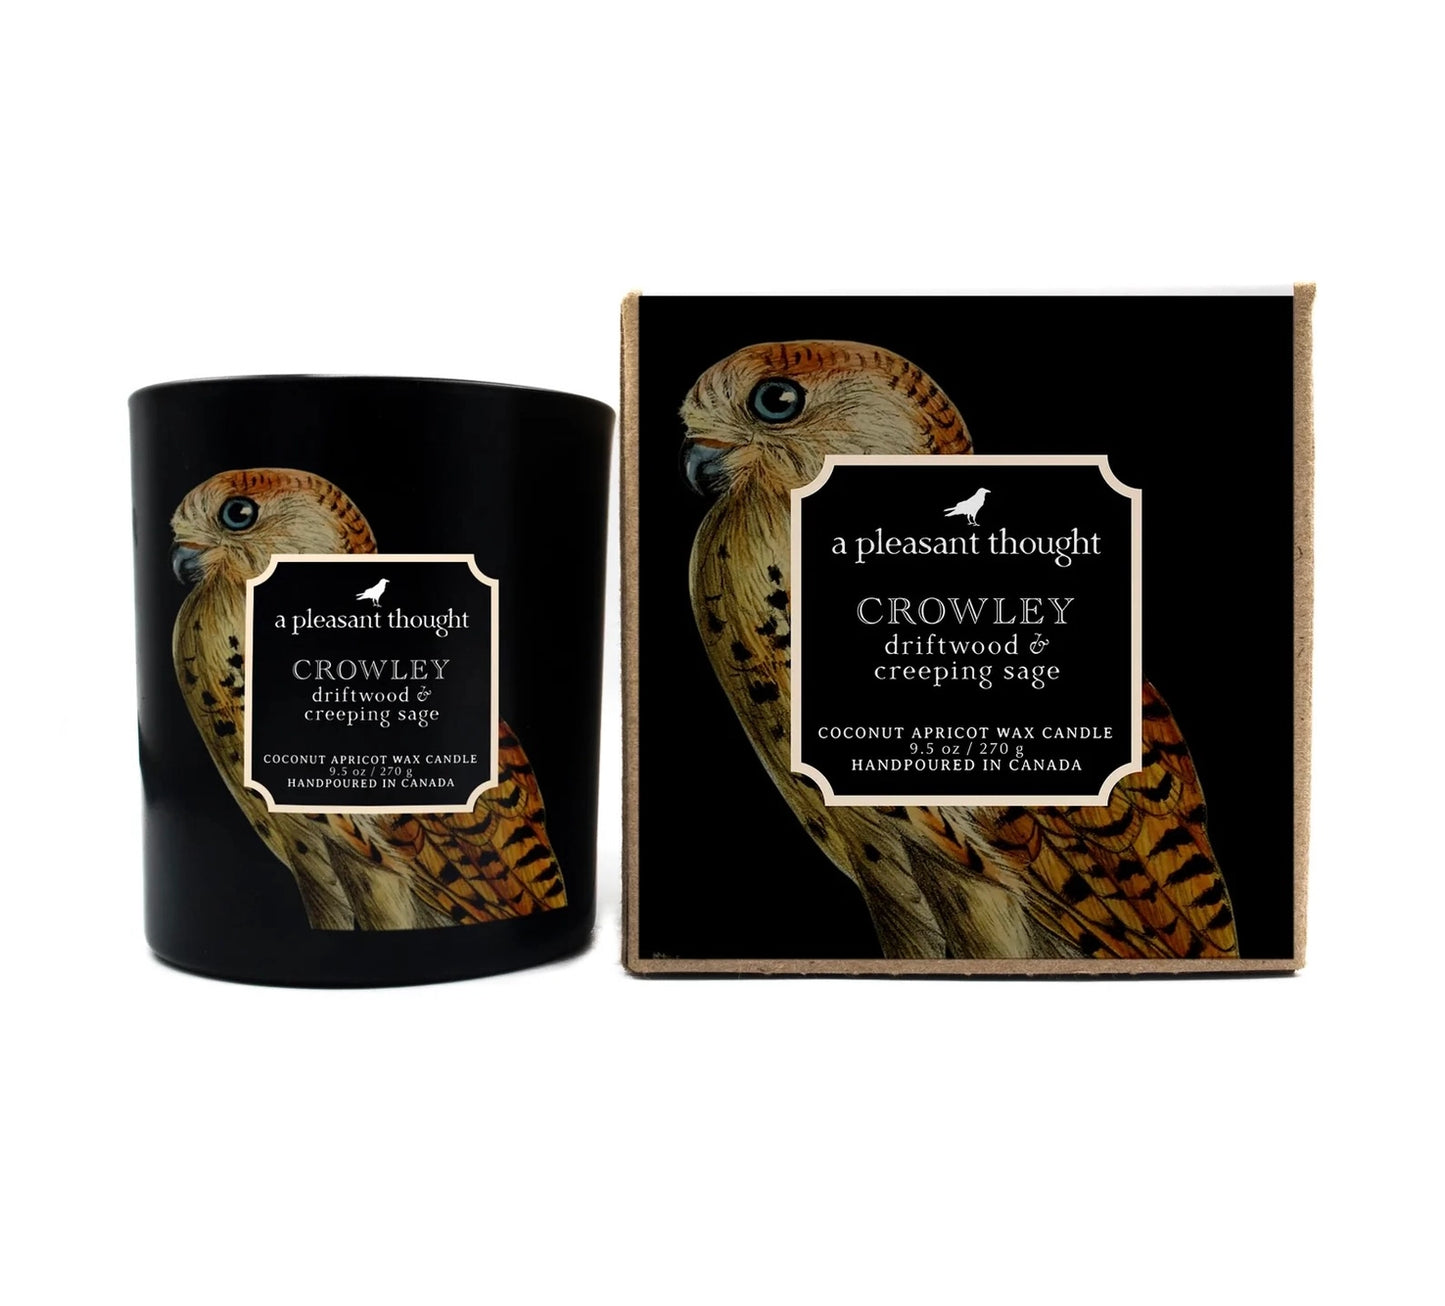 Crowley Driftwood & Creeping Sage Candle